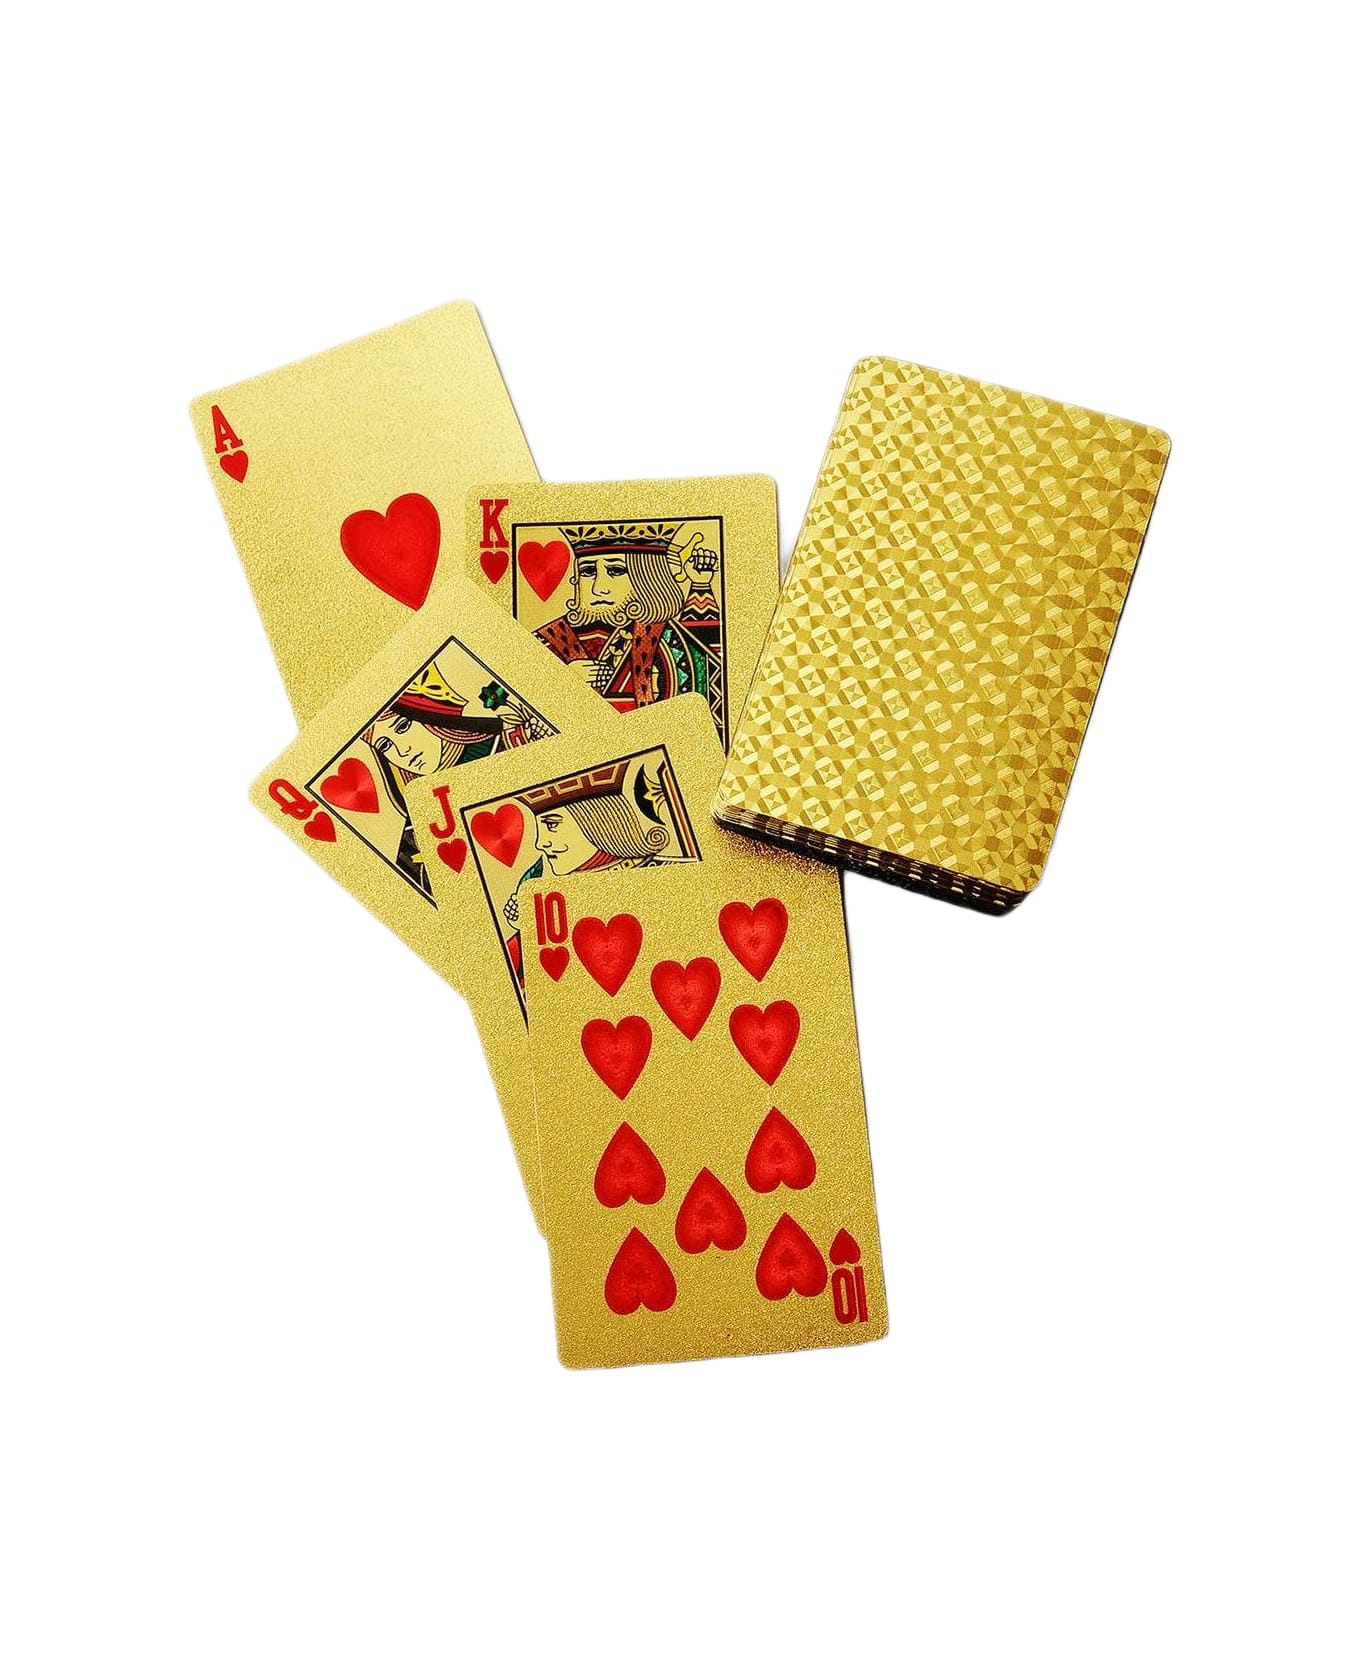 Larusmiani Playing Cards 'venezia' Game - Gold